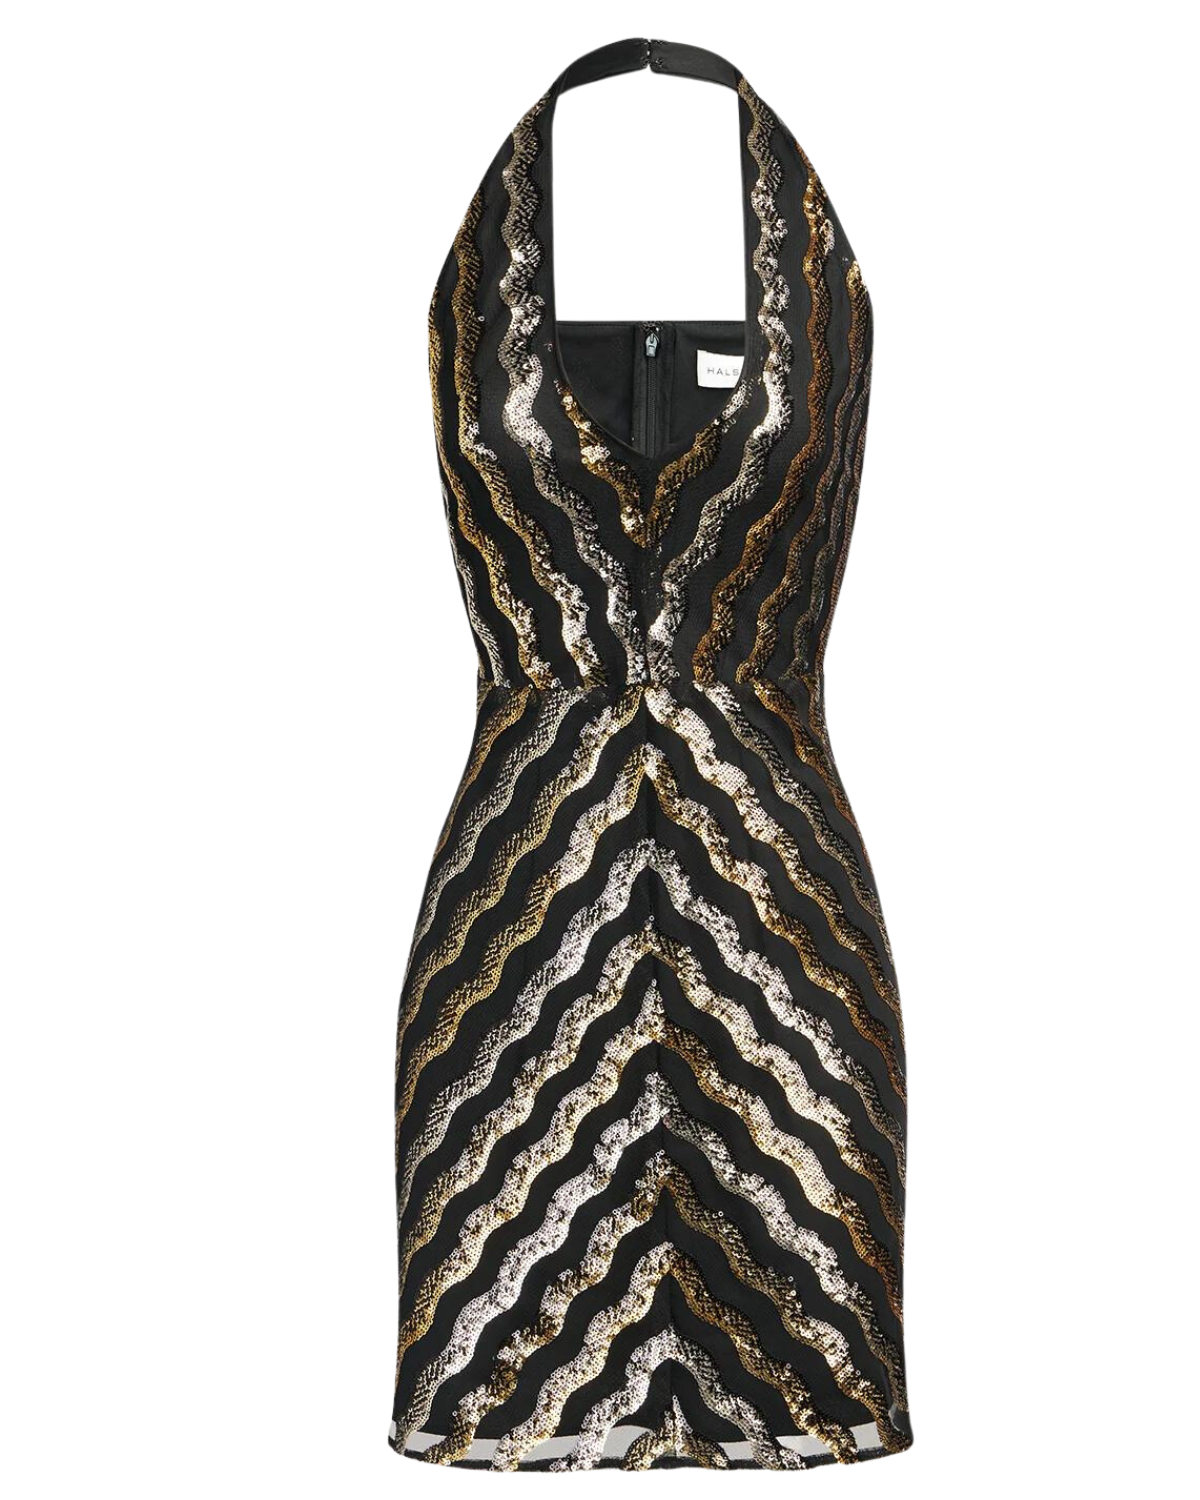 Nidya Halter Dress (Black/Gold Wavy Sequin)